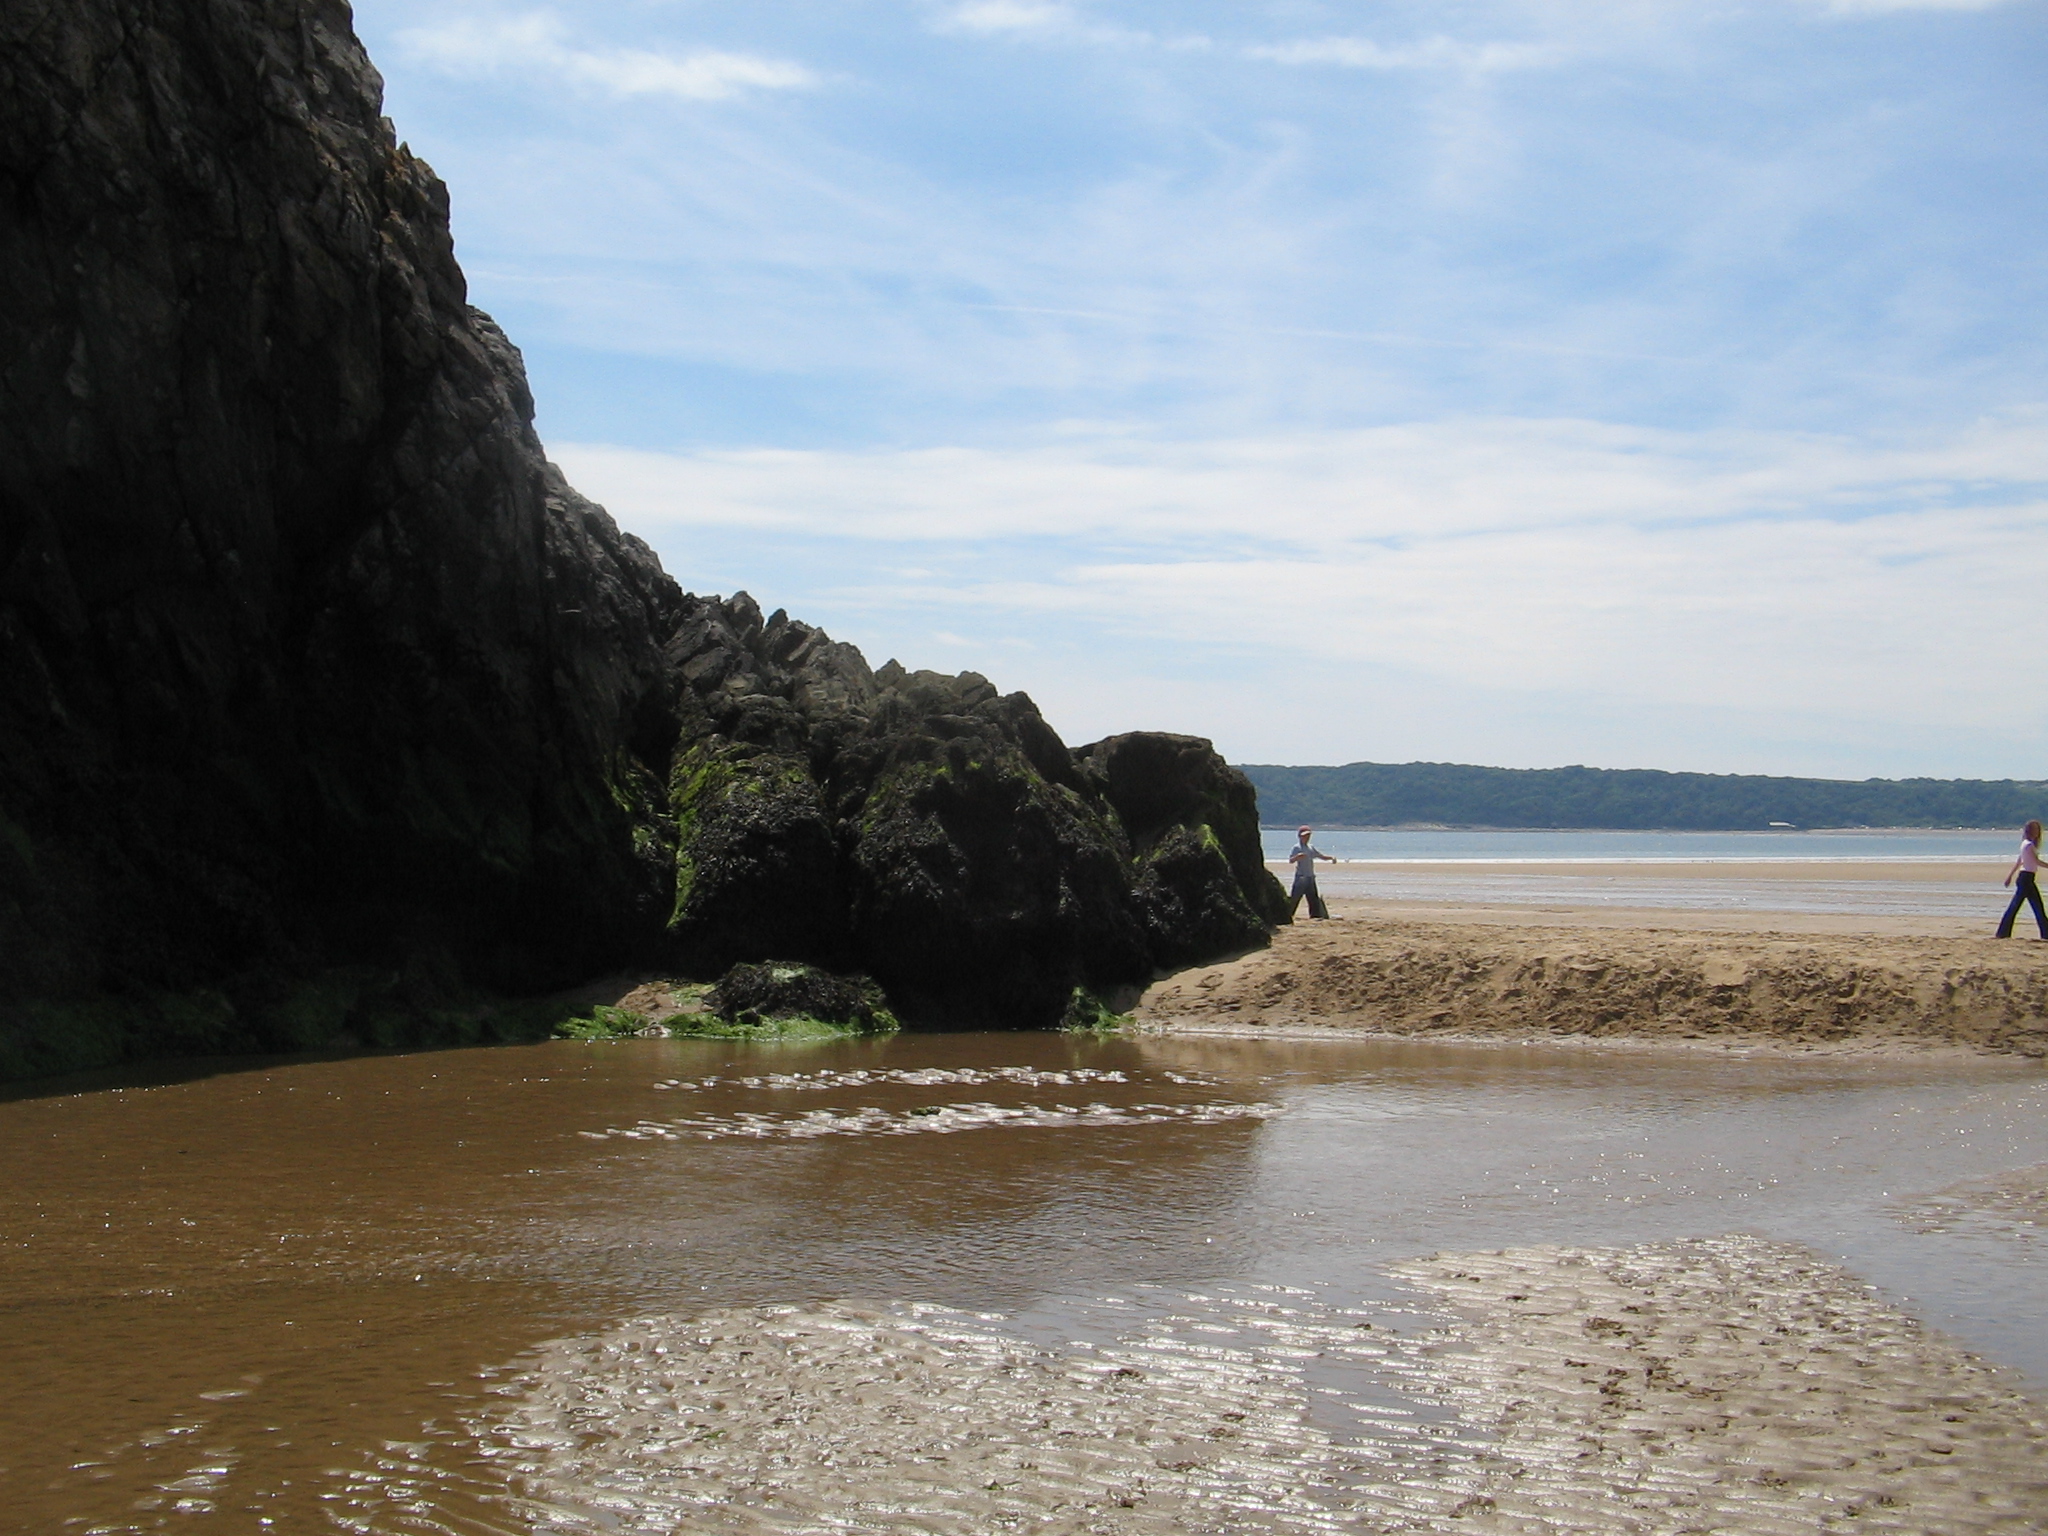 Beach at three cliffs bay Swansea, Wales